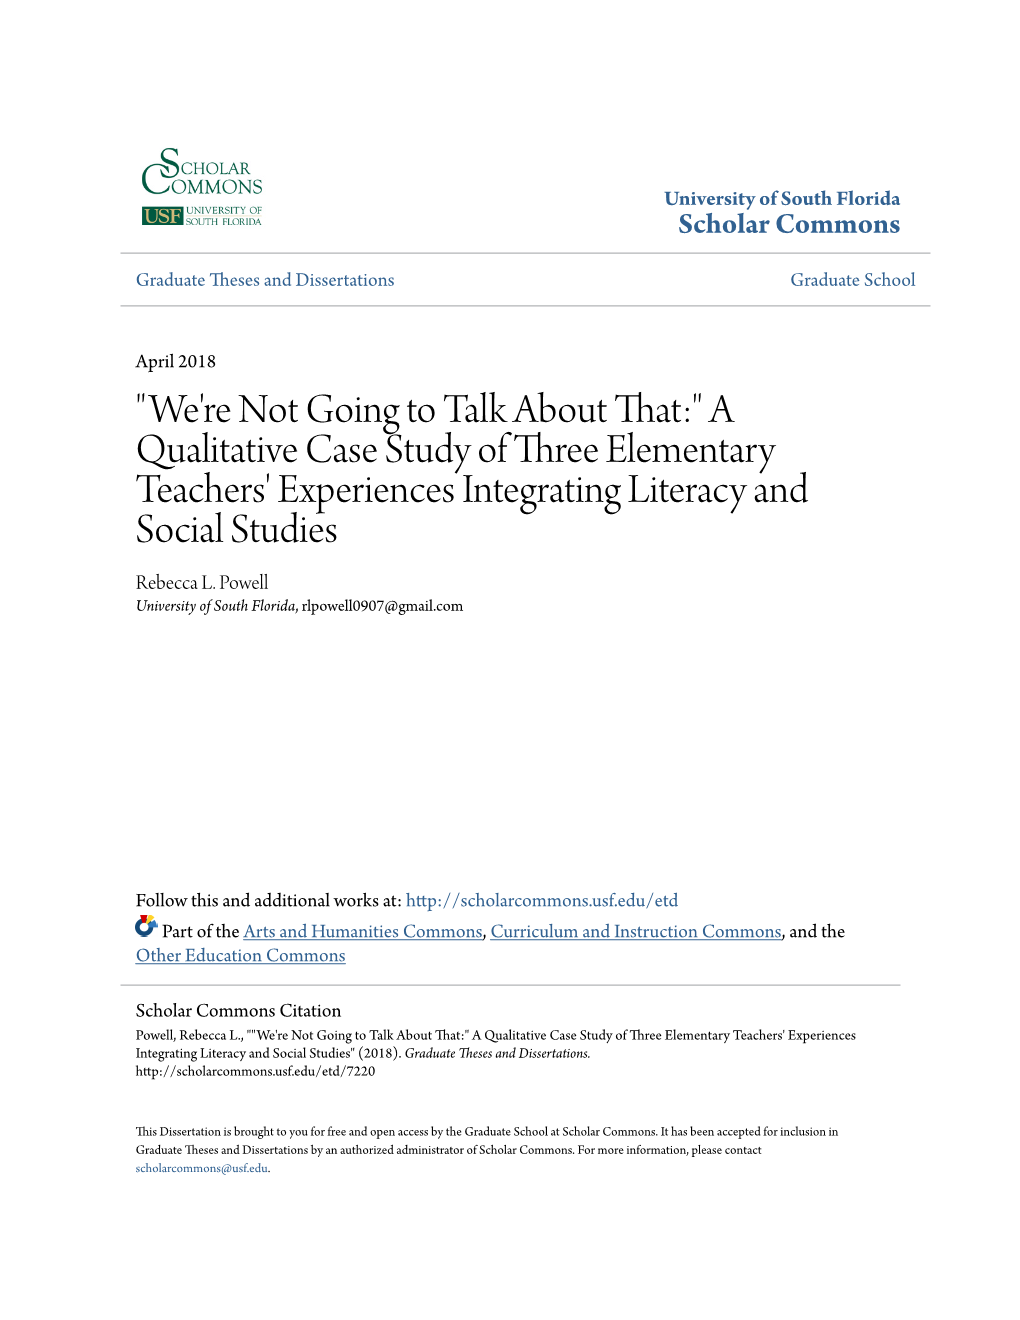 A Qualitative Case Study of Three Elementary Teachers' Experiences Integrating Literacy and Social Studies Rebecca L